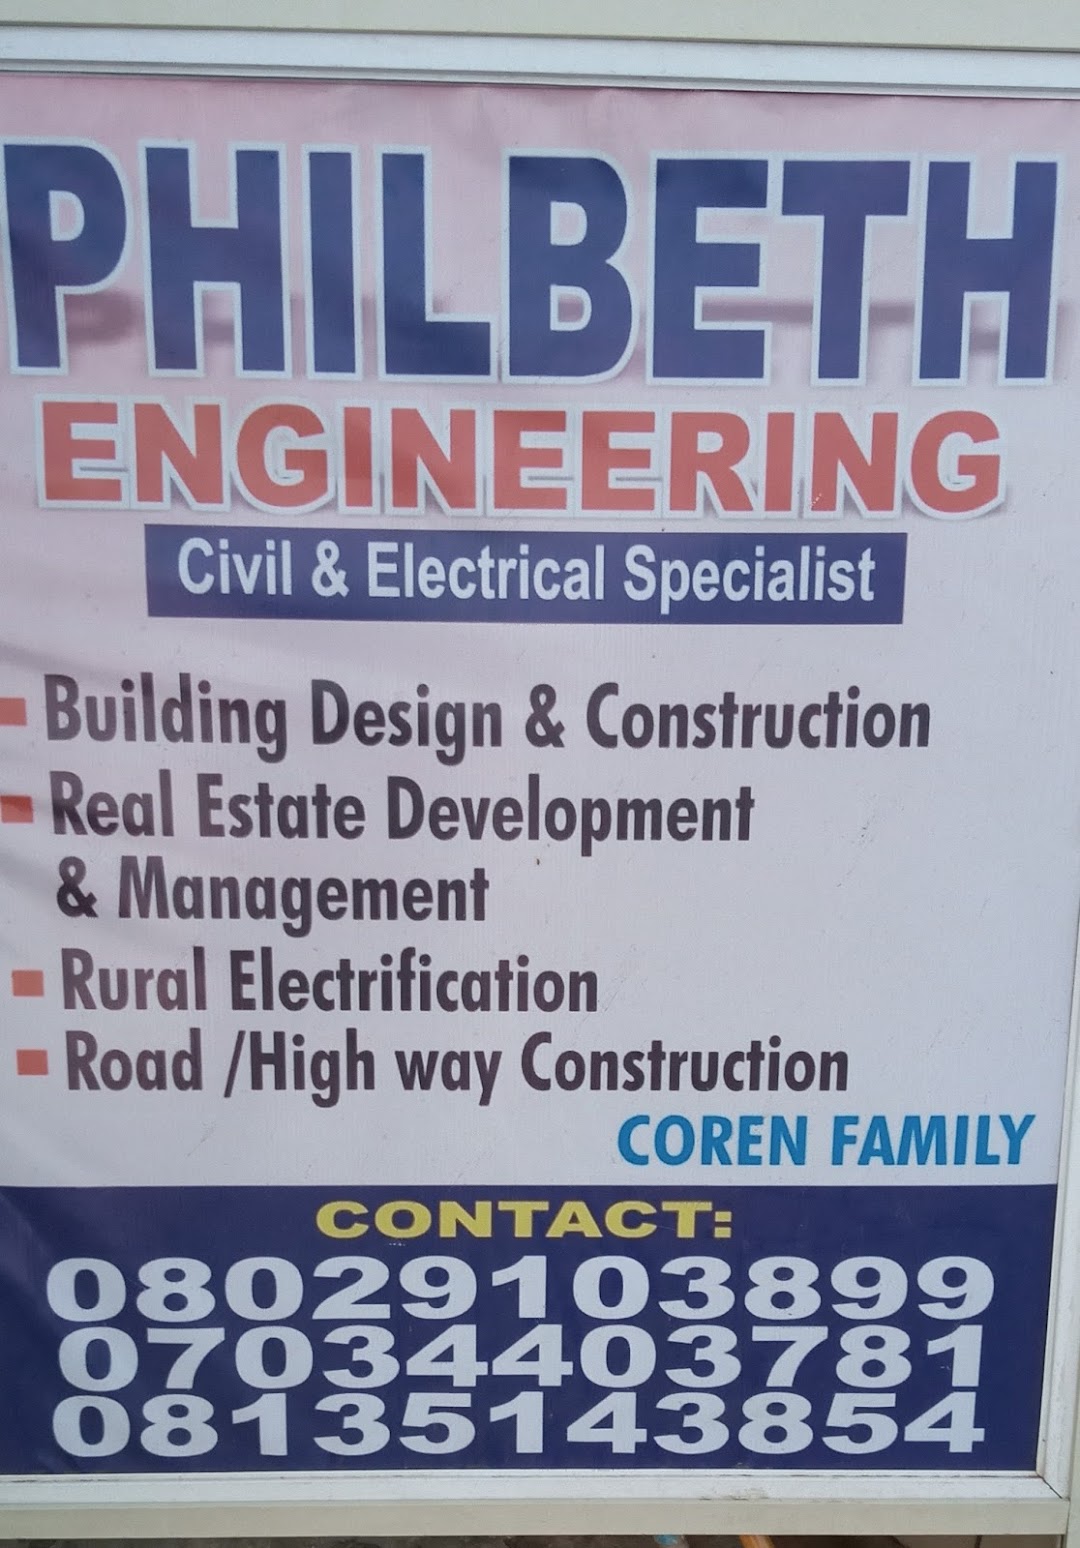 Philbeth Engineering Resources